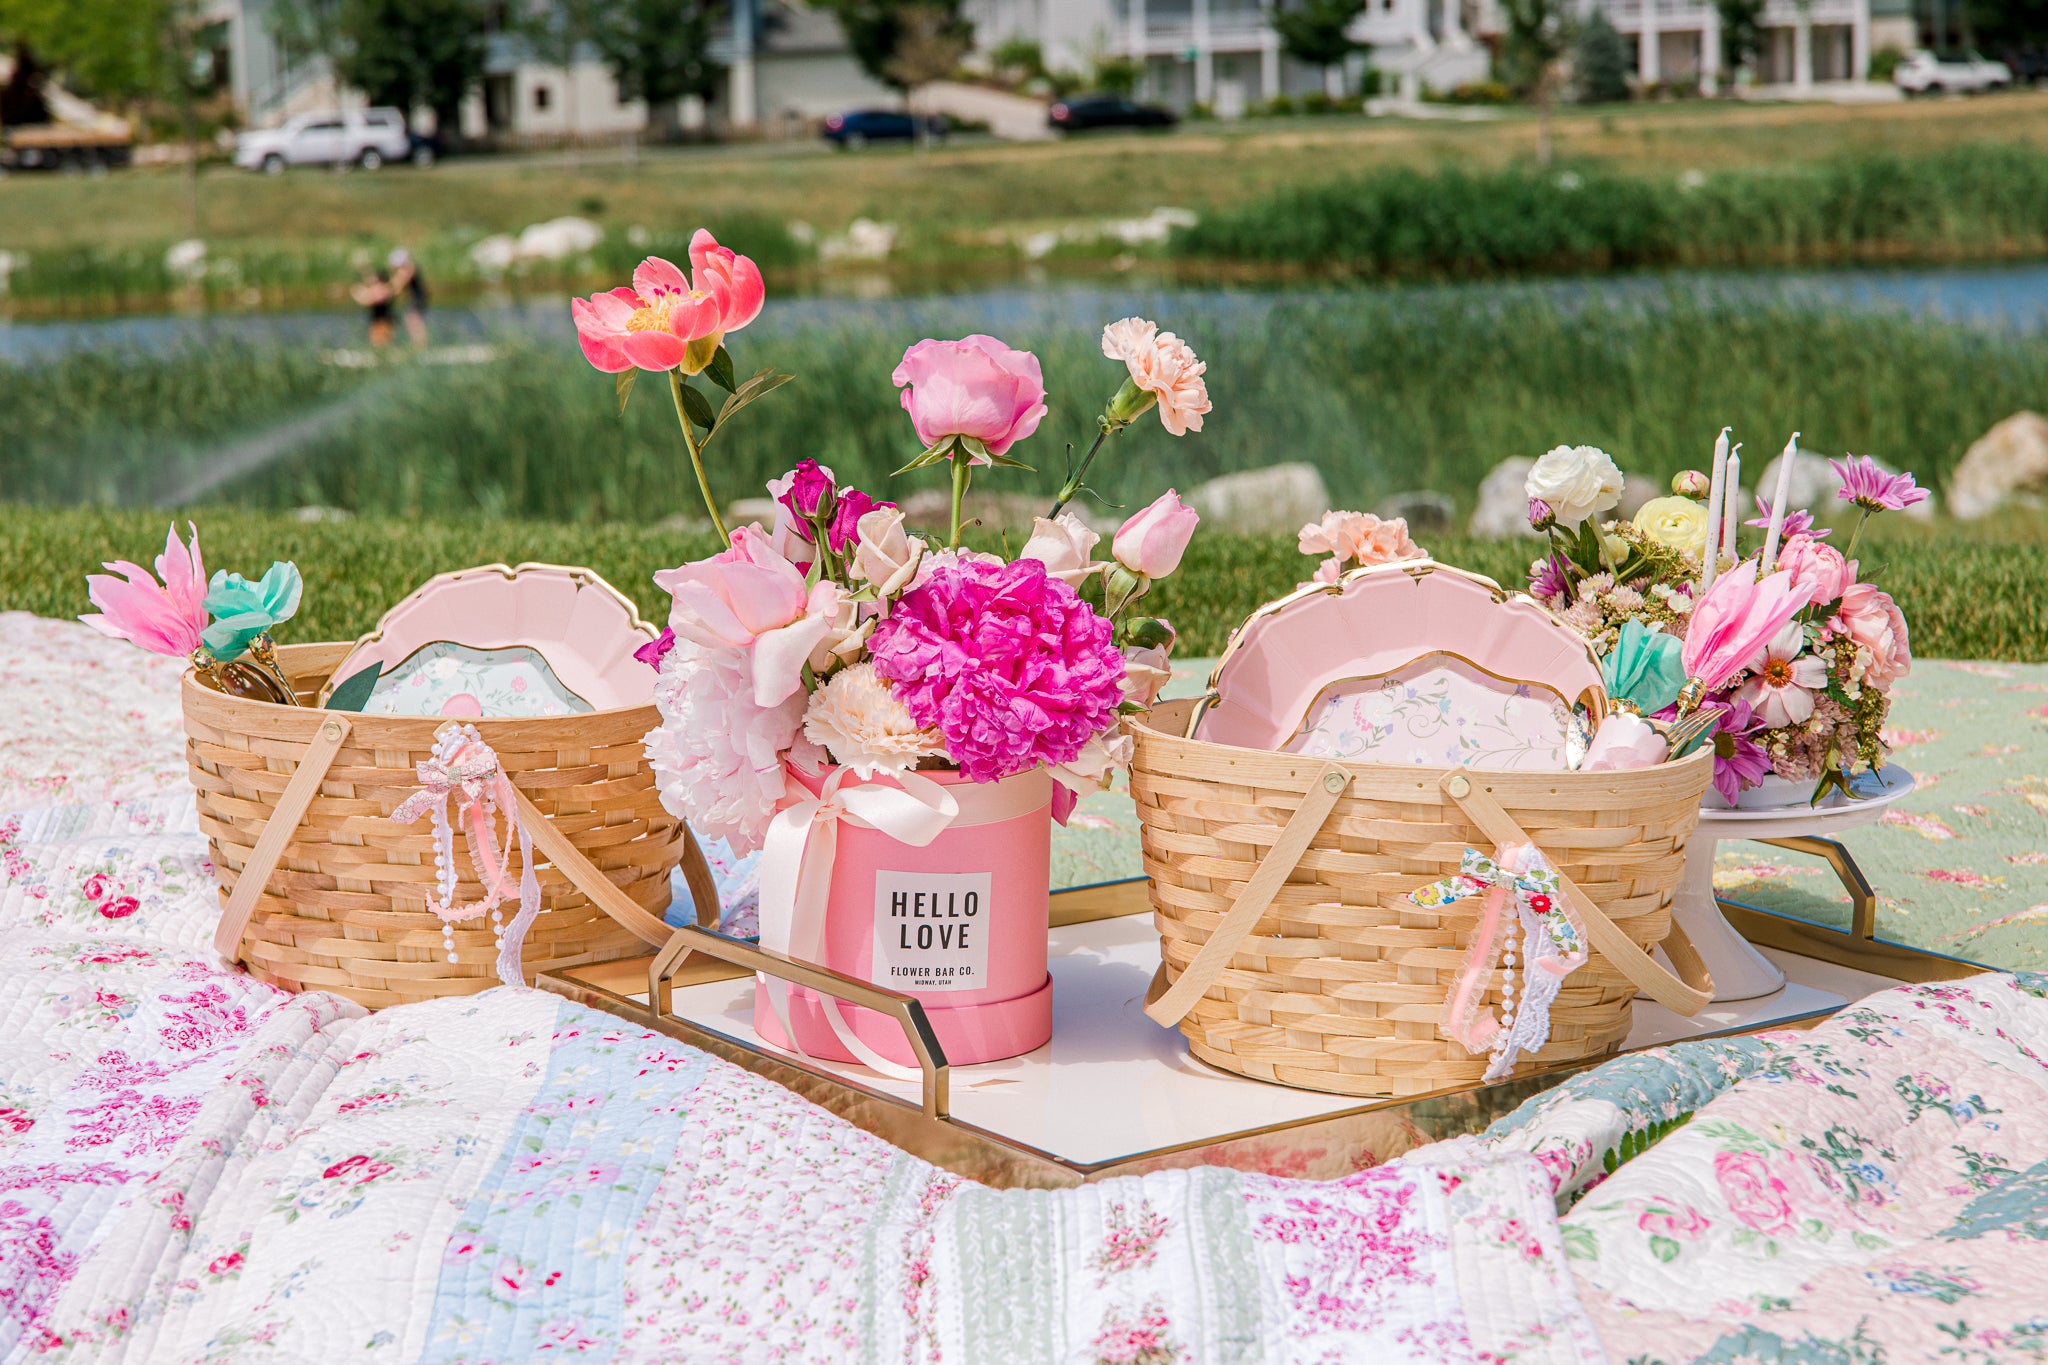 Tea party birthday ideas for a lakeside picnic. 